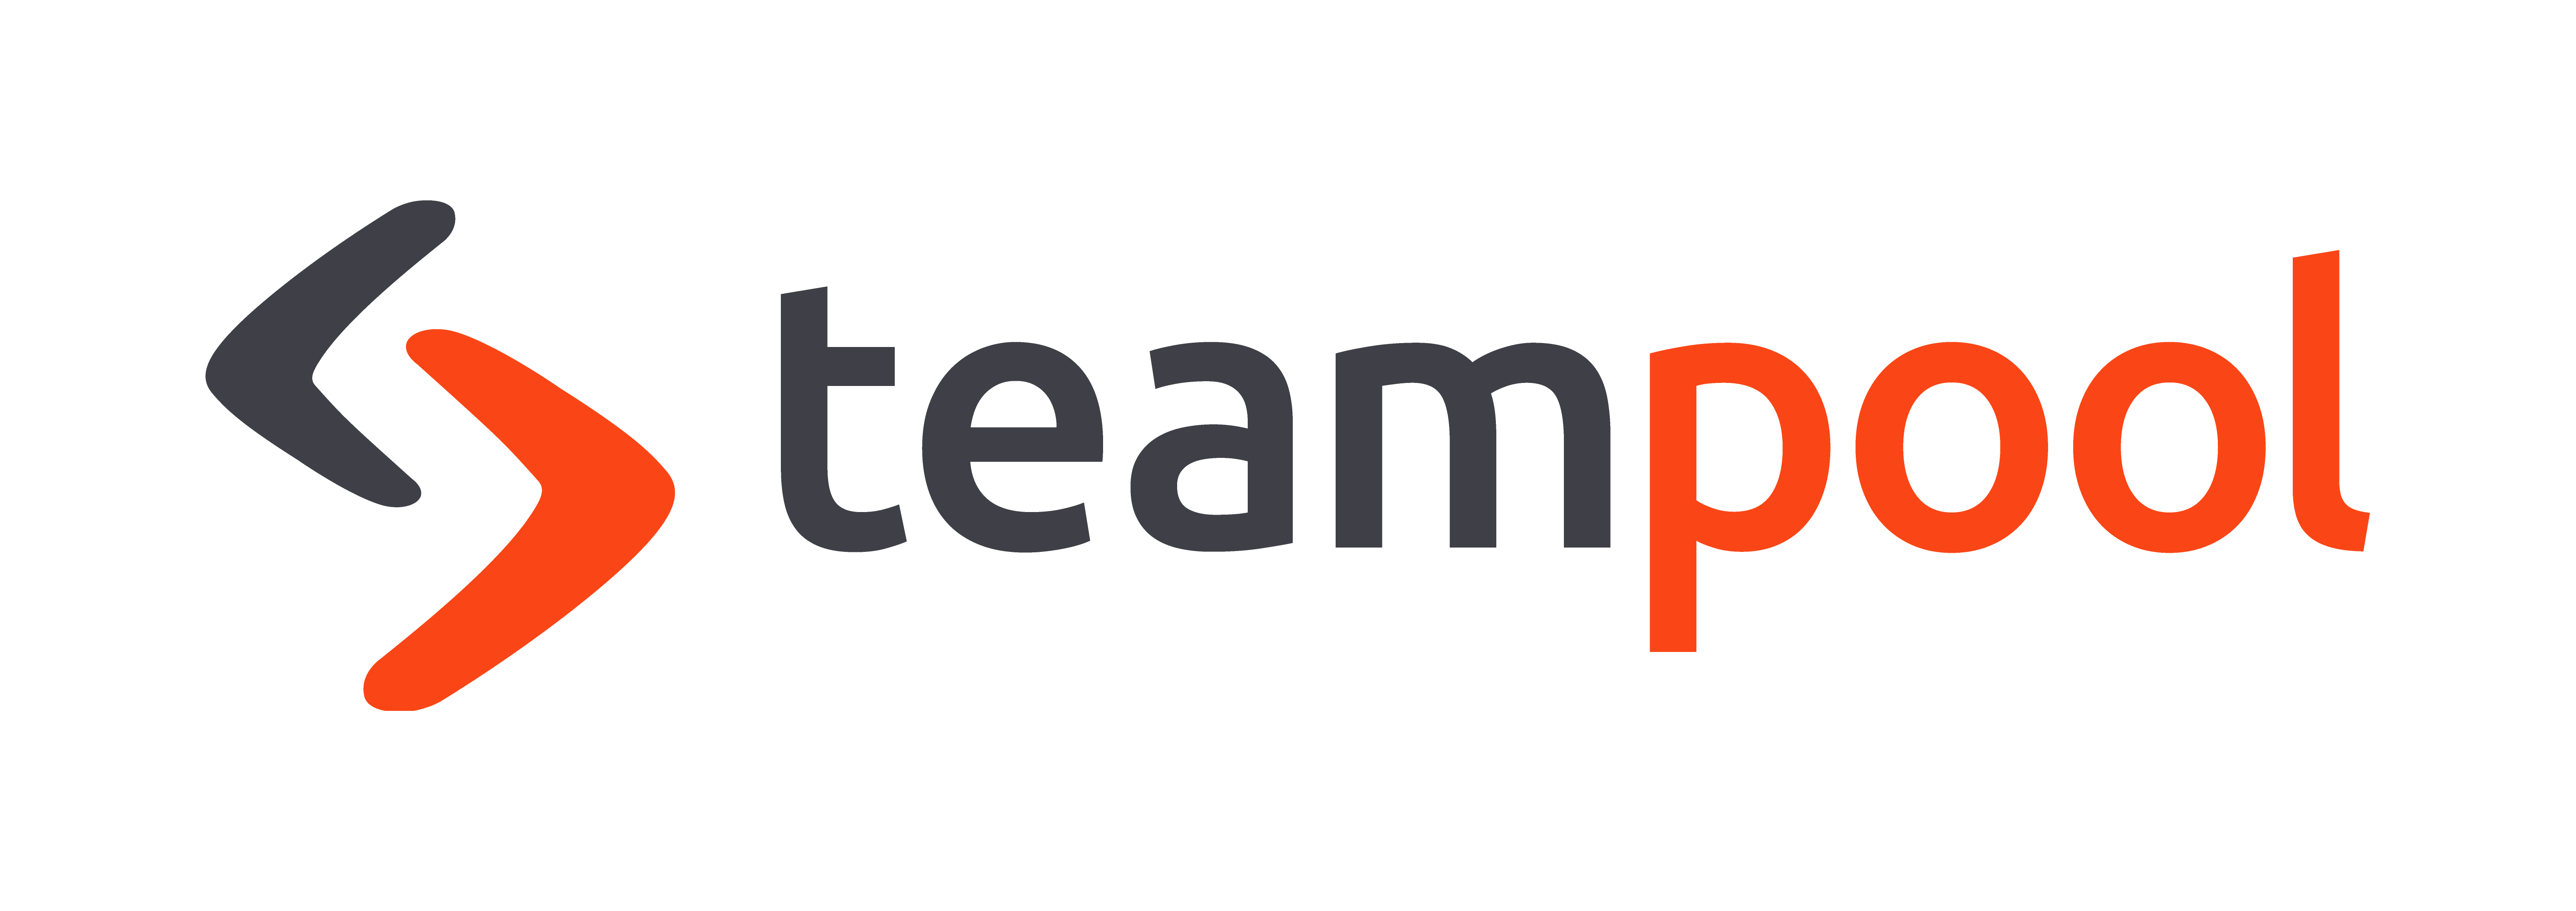 teampool Logo